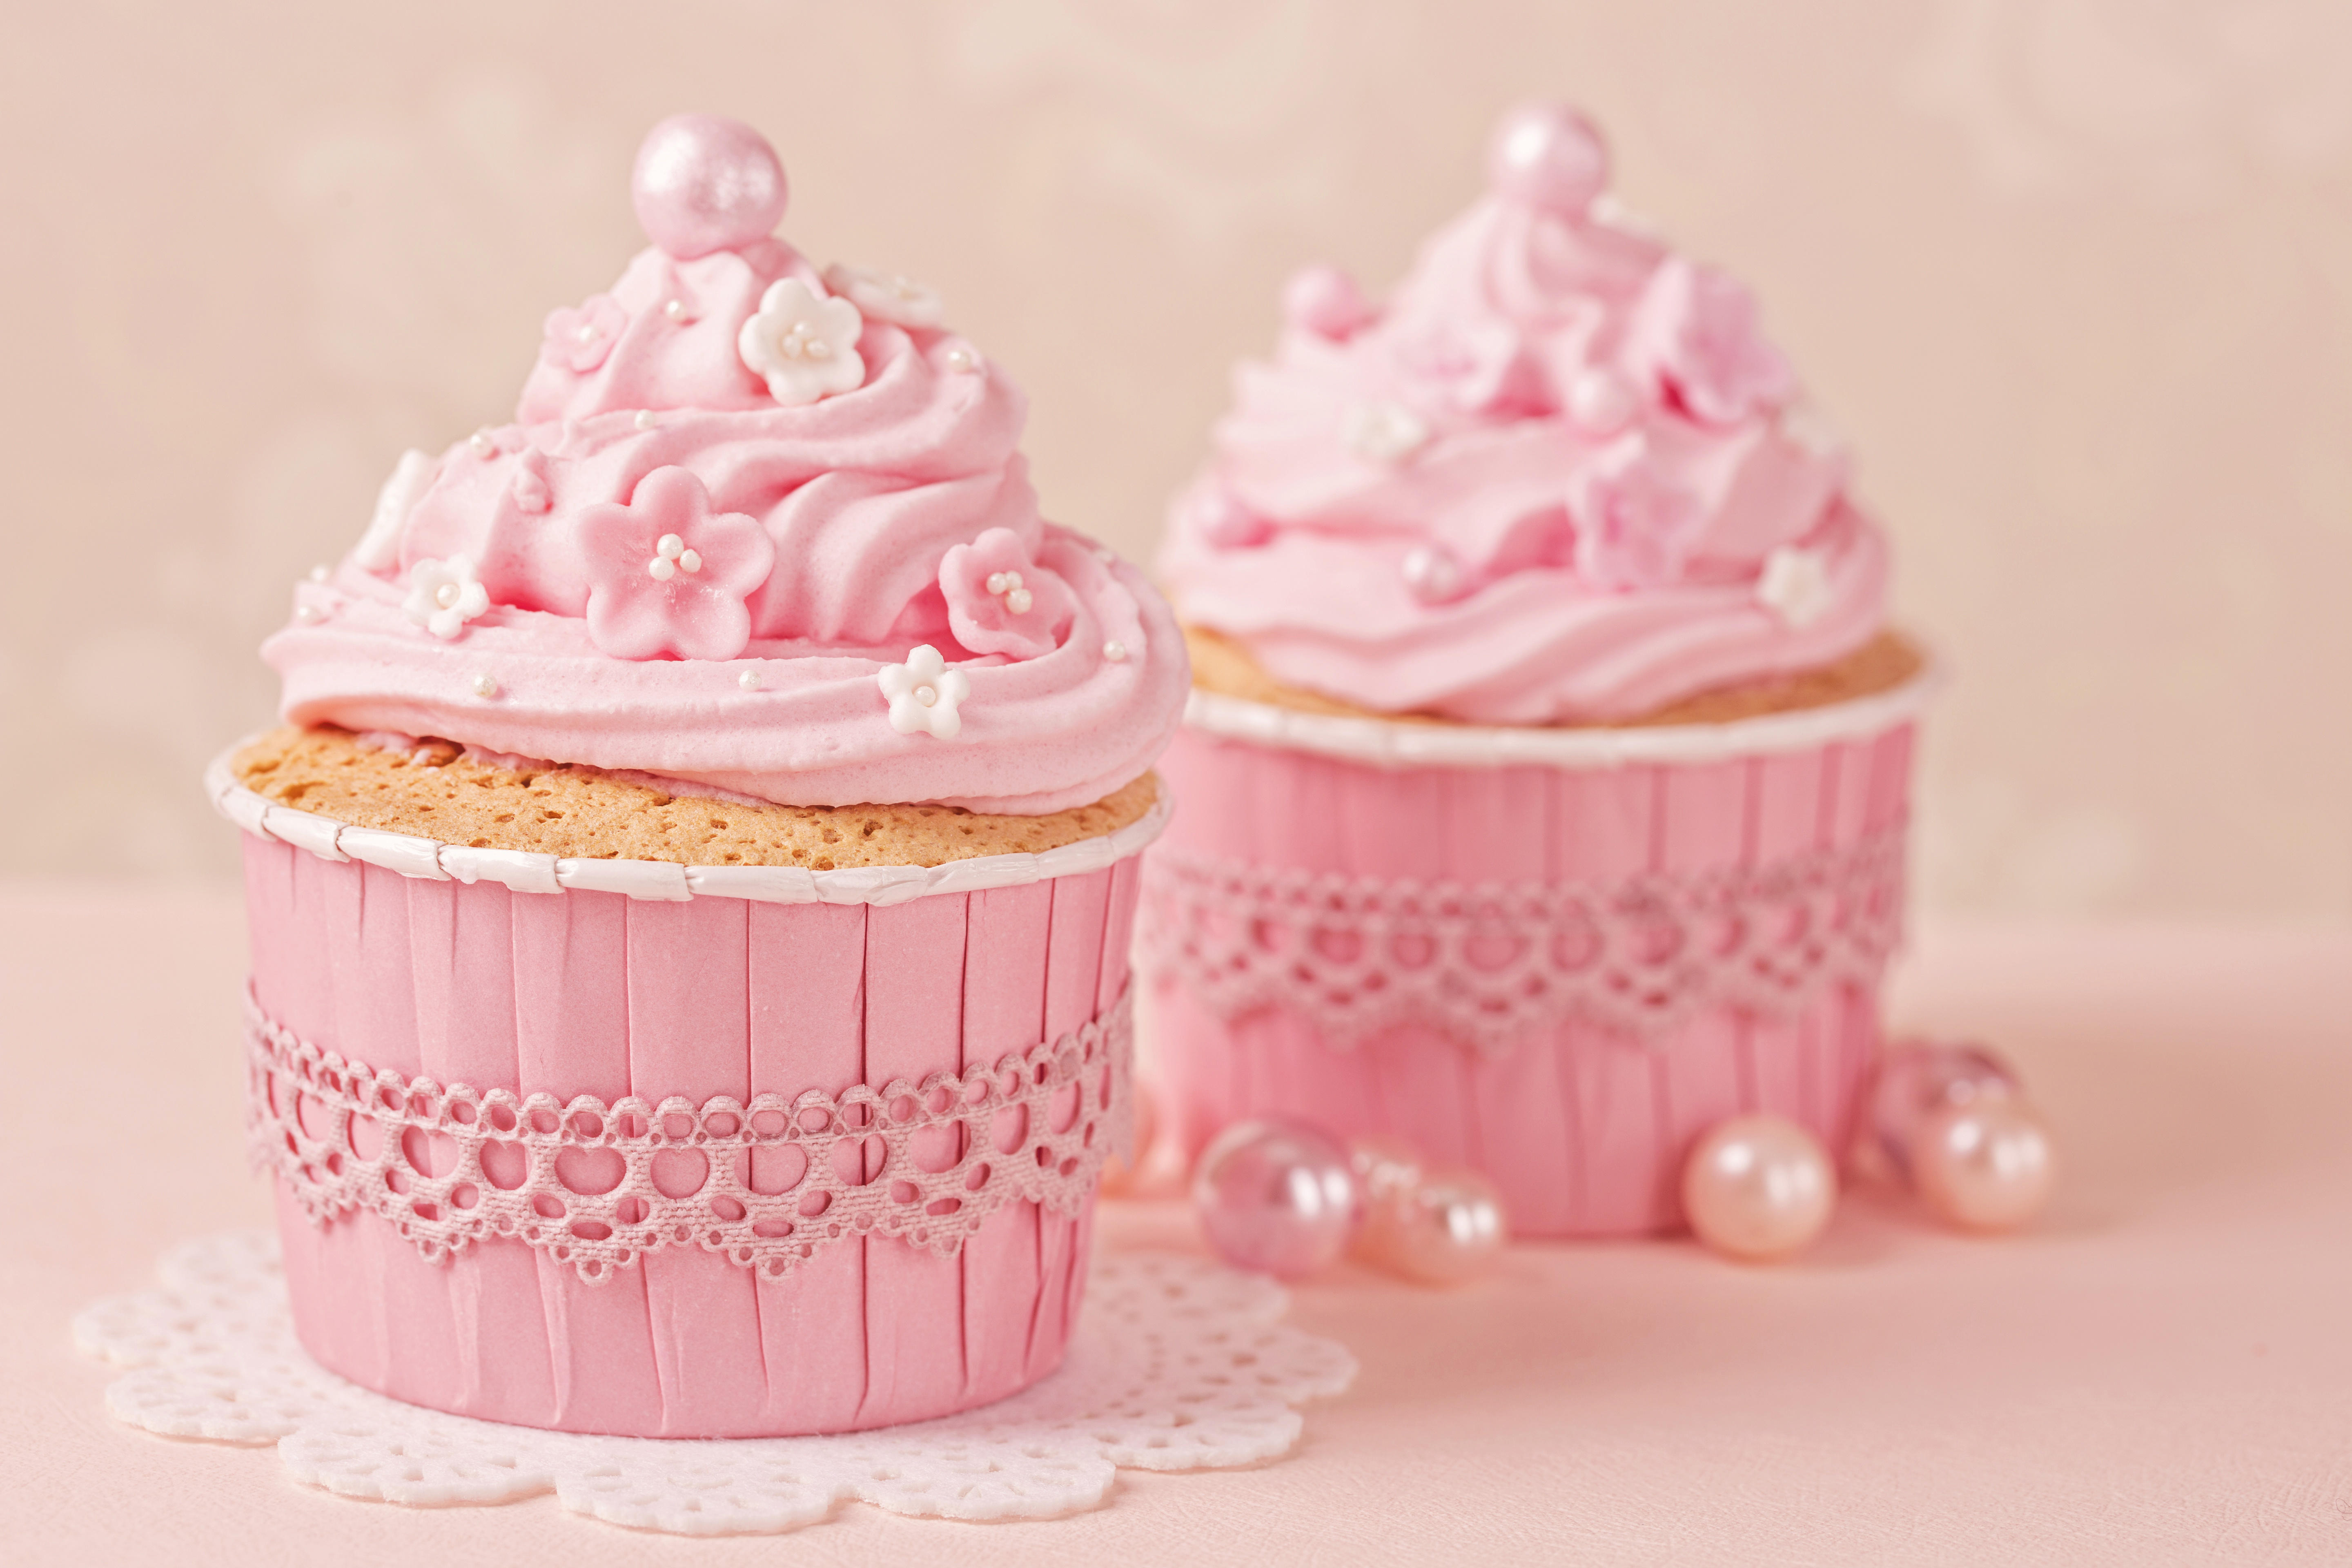 Wallpapers pink cupcake baby on the desktop